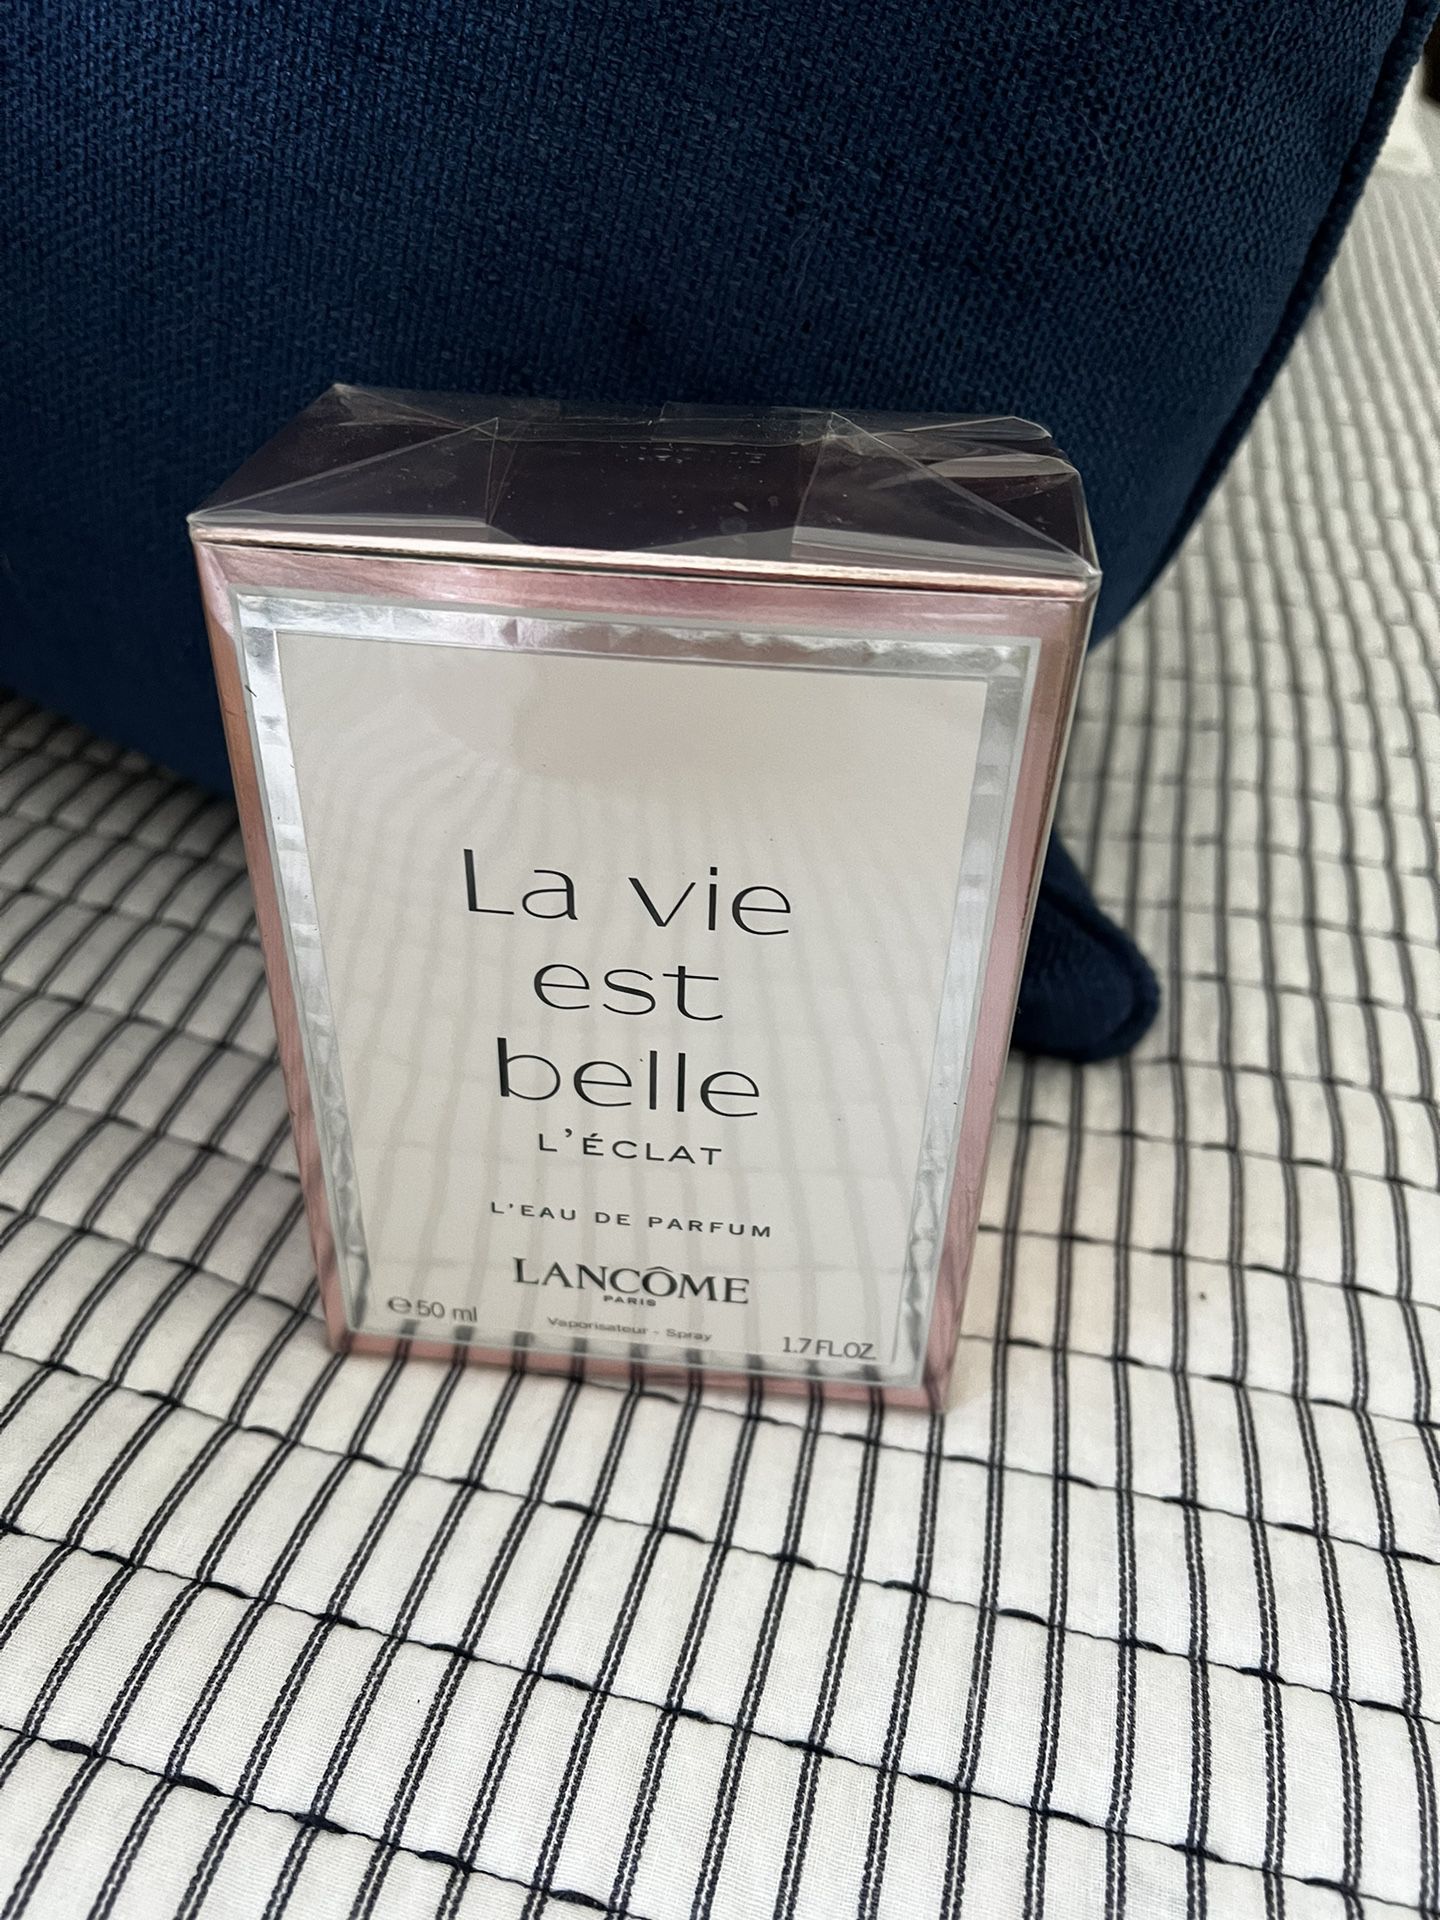 Brand New Lancôme L’eclat 1.7 Fl Oz. Perfume